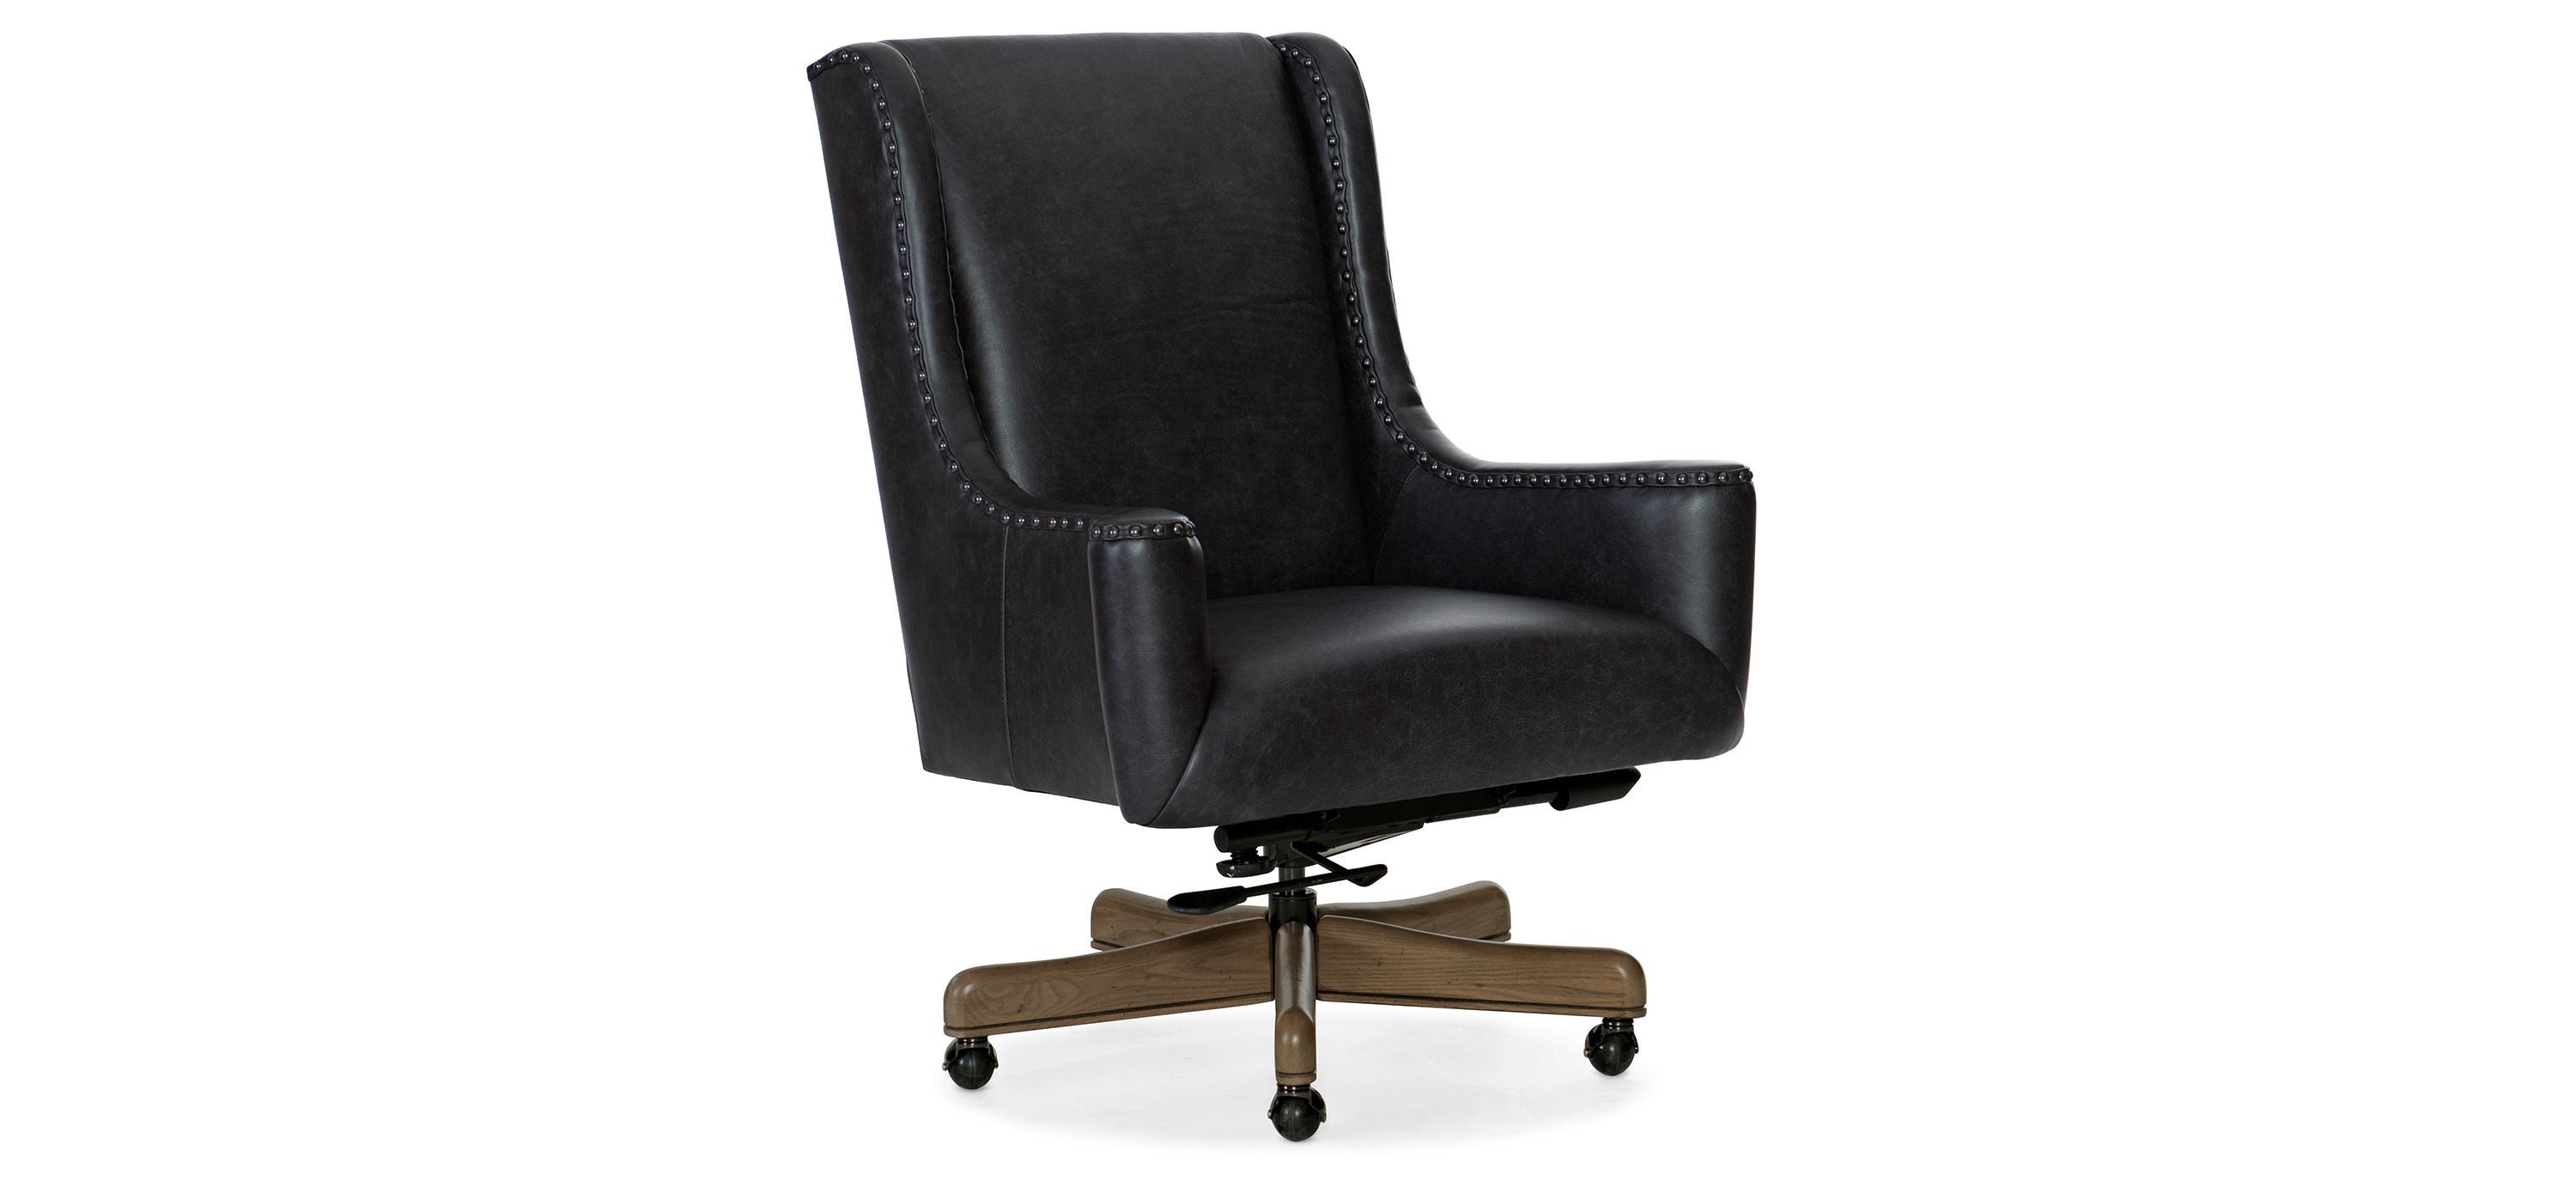 Lily Executive Swivel Tilt Chair